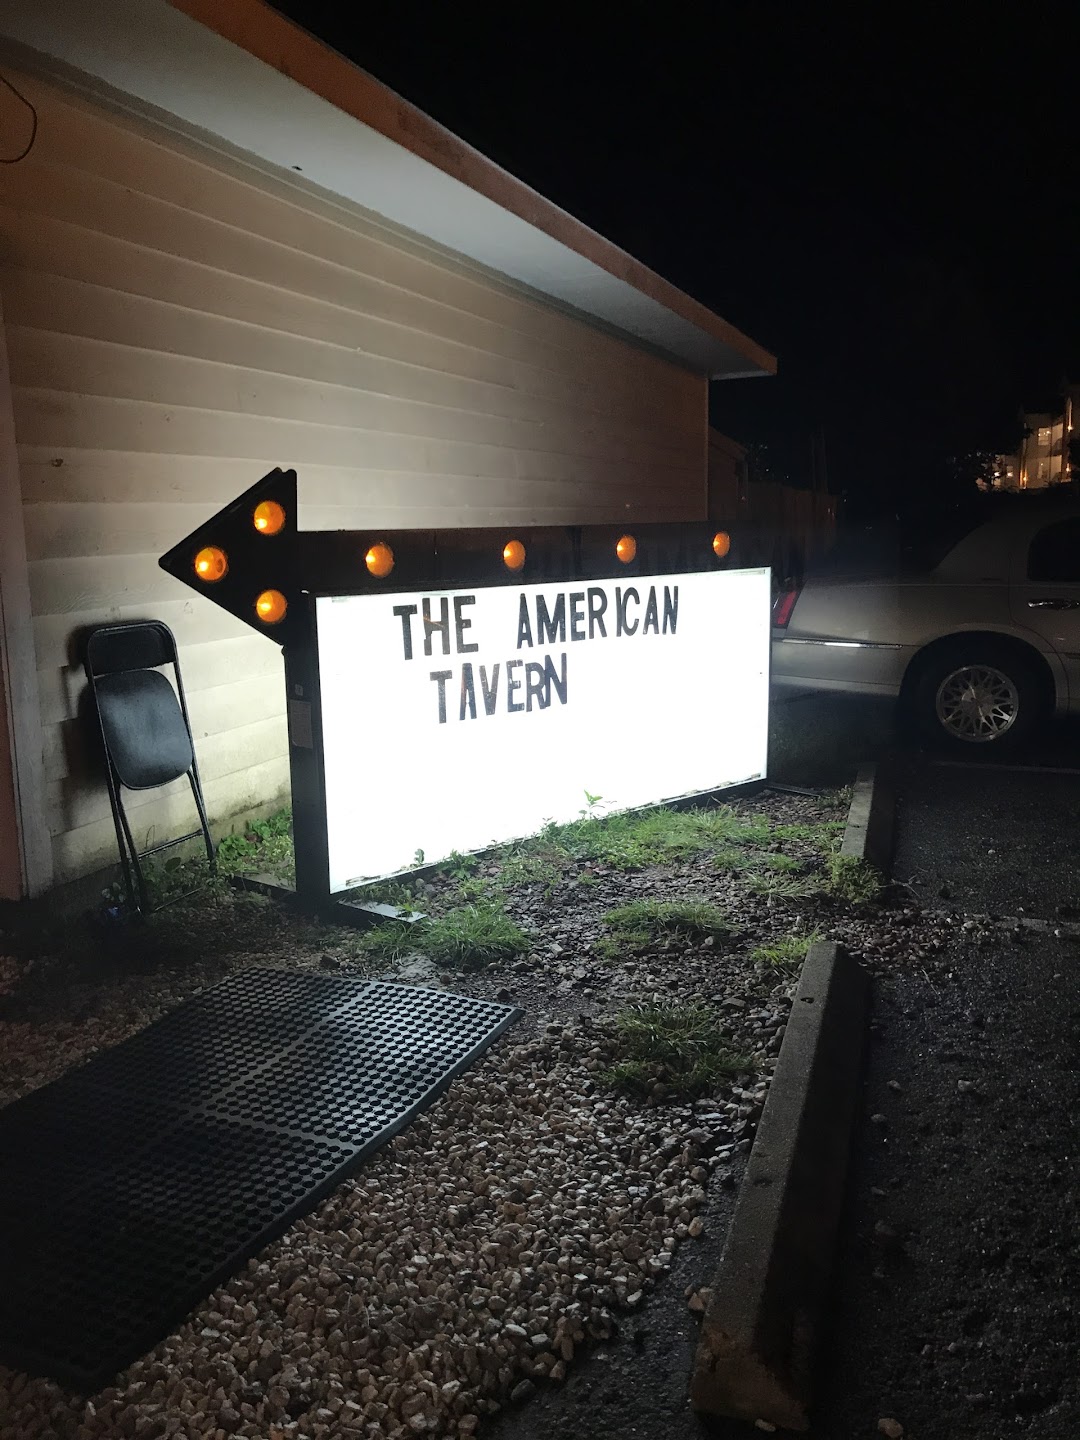 American Tavern